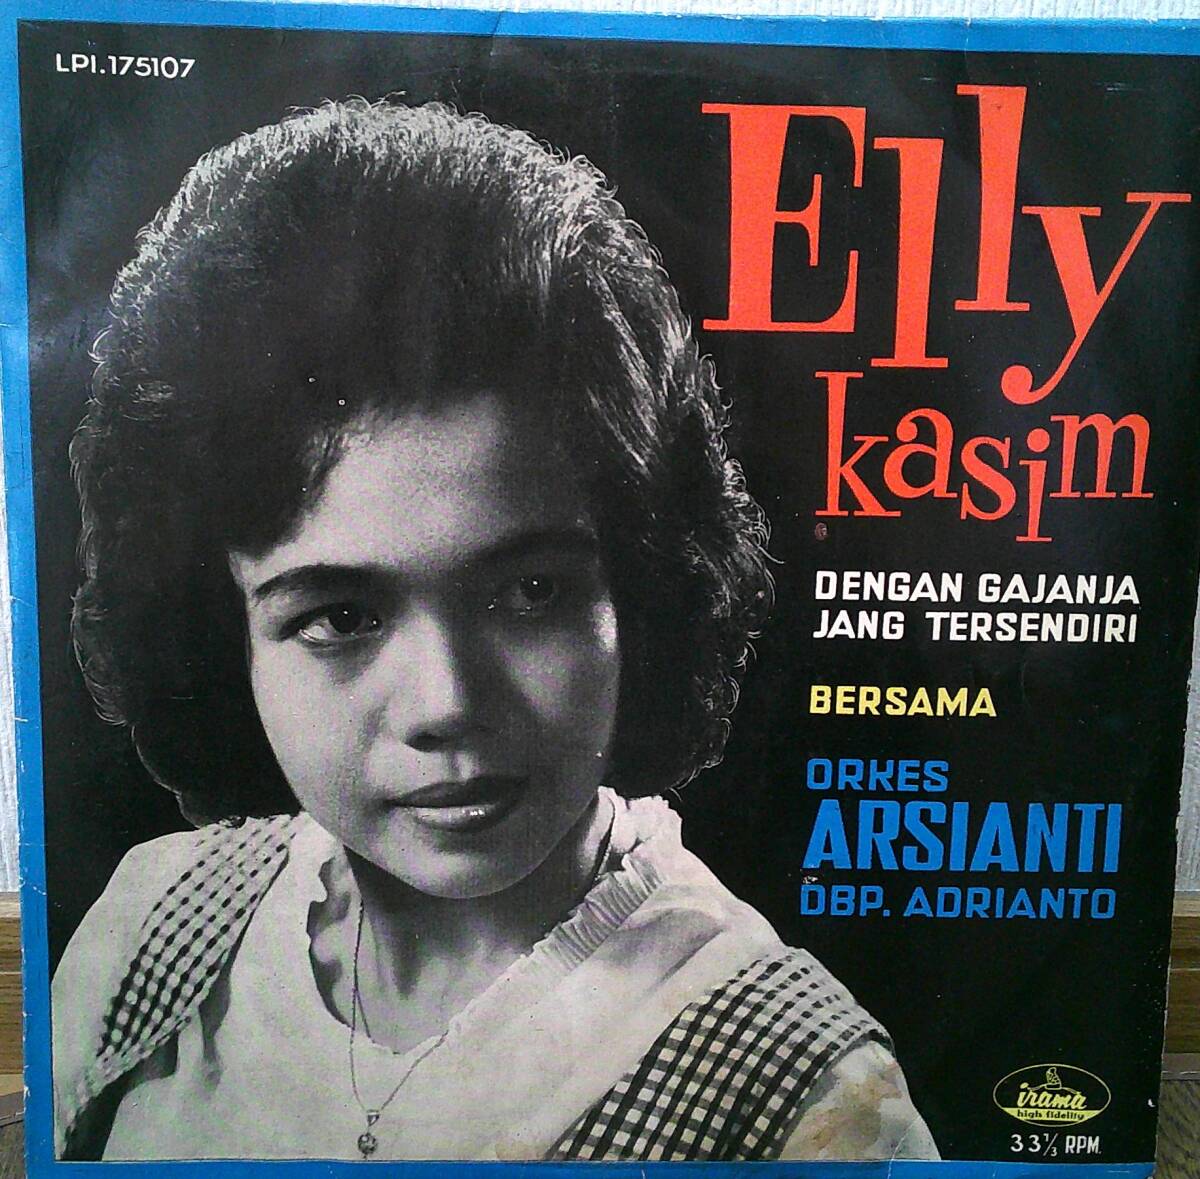 LP：エリー・カシム Elly Kasim インドネシア 人気女性歌手の画像1